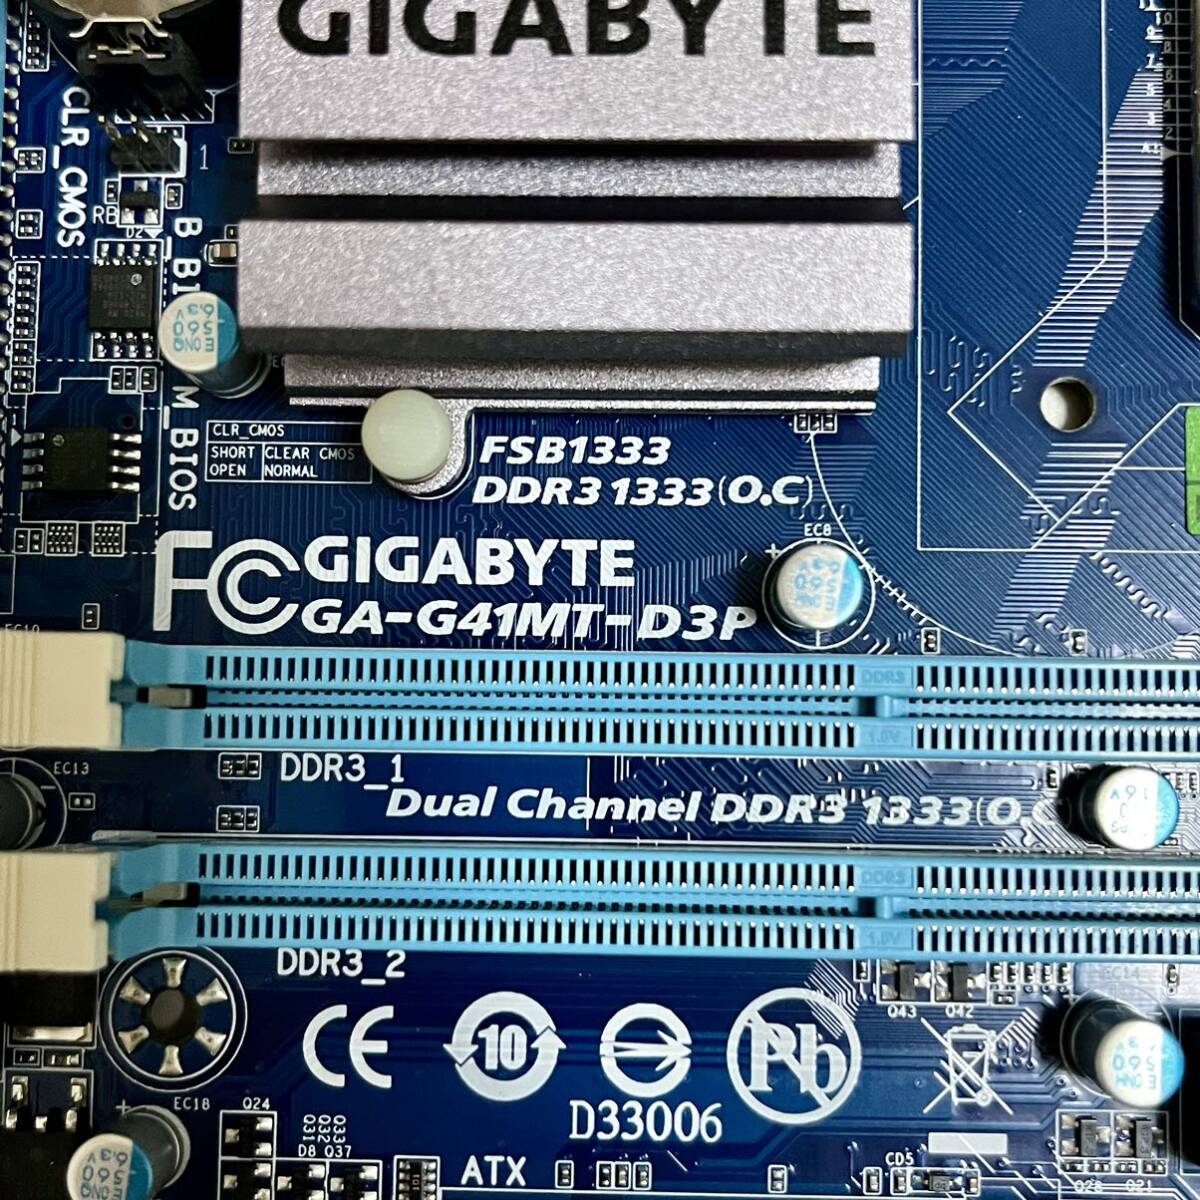  operation verification settled newest BIOS update settled GIGABYTE GA-G41MT-D3P motherboard 